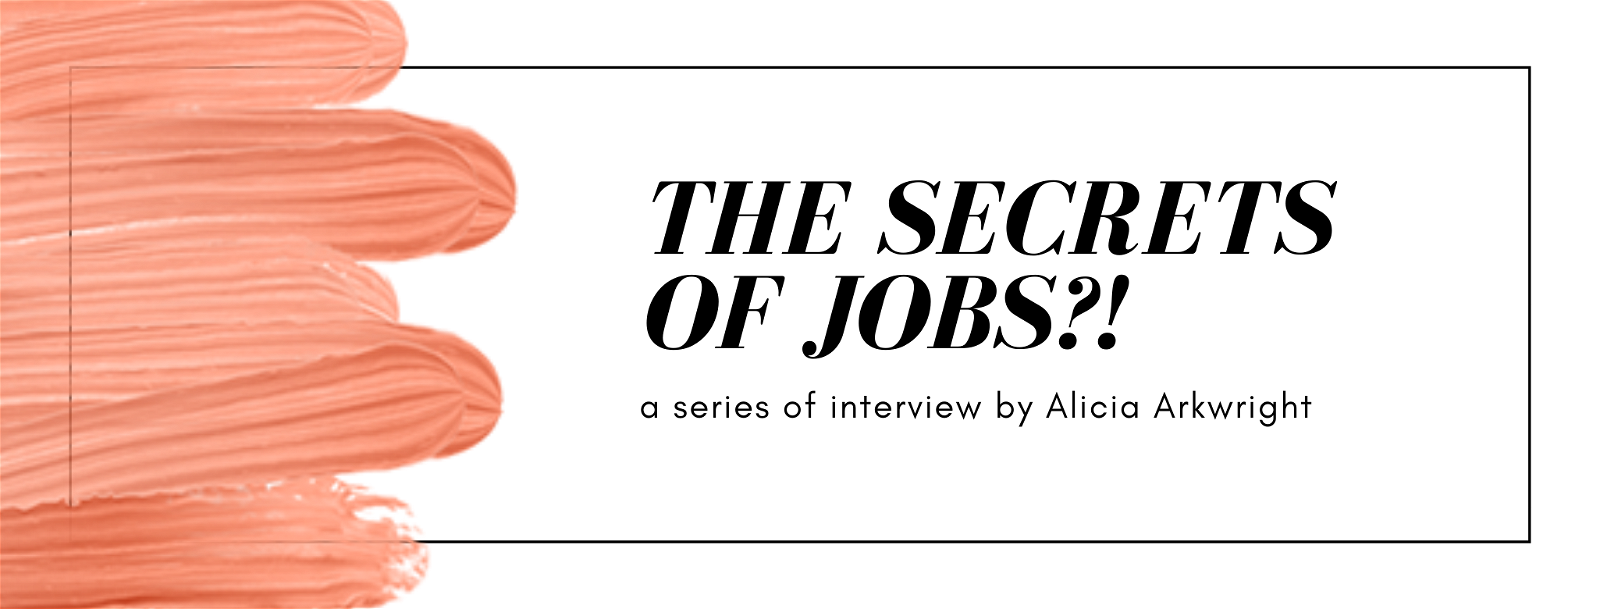 The Secrets of Jobs #2